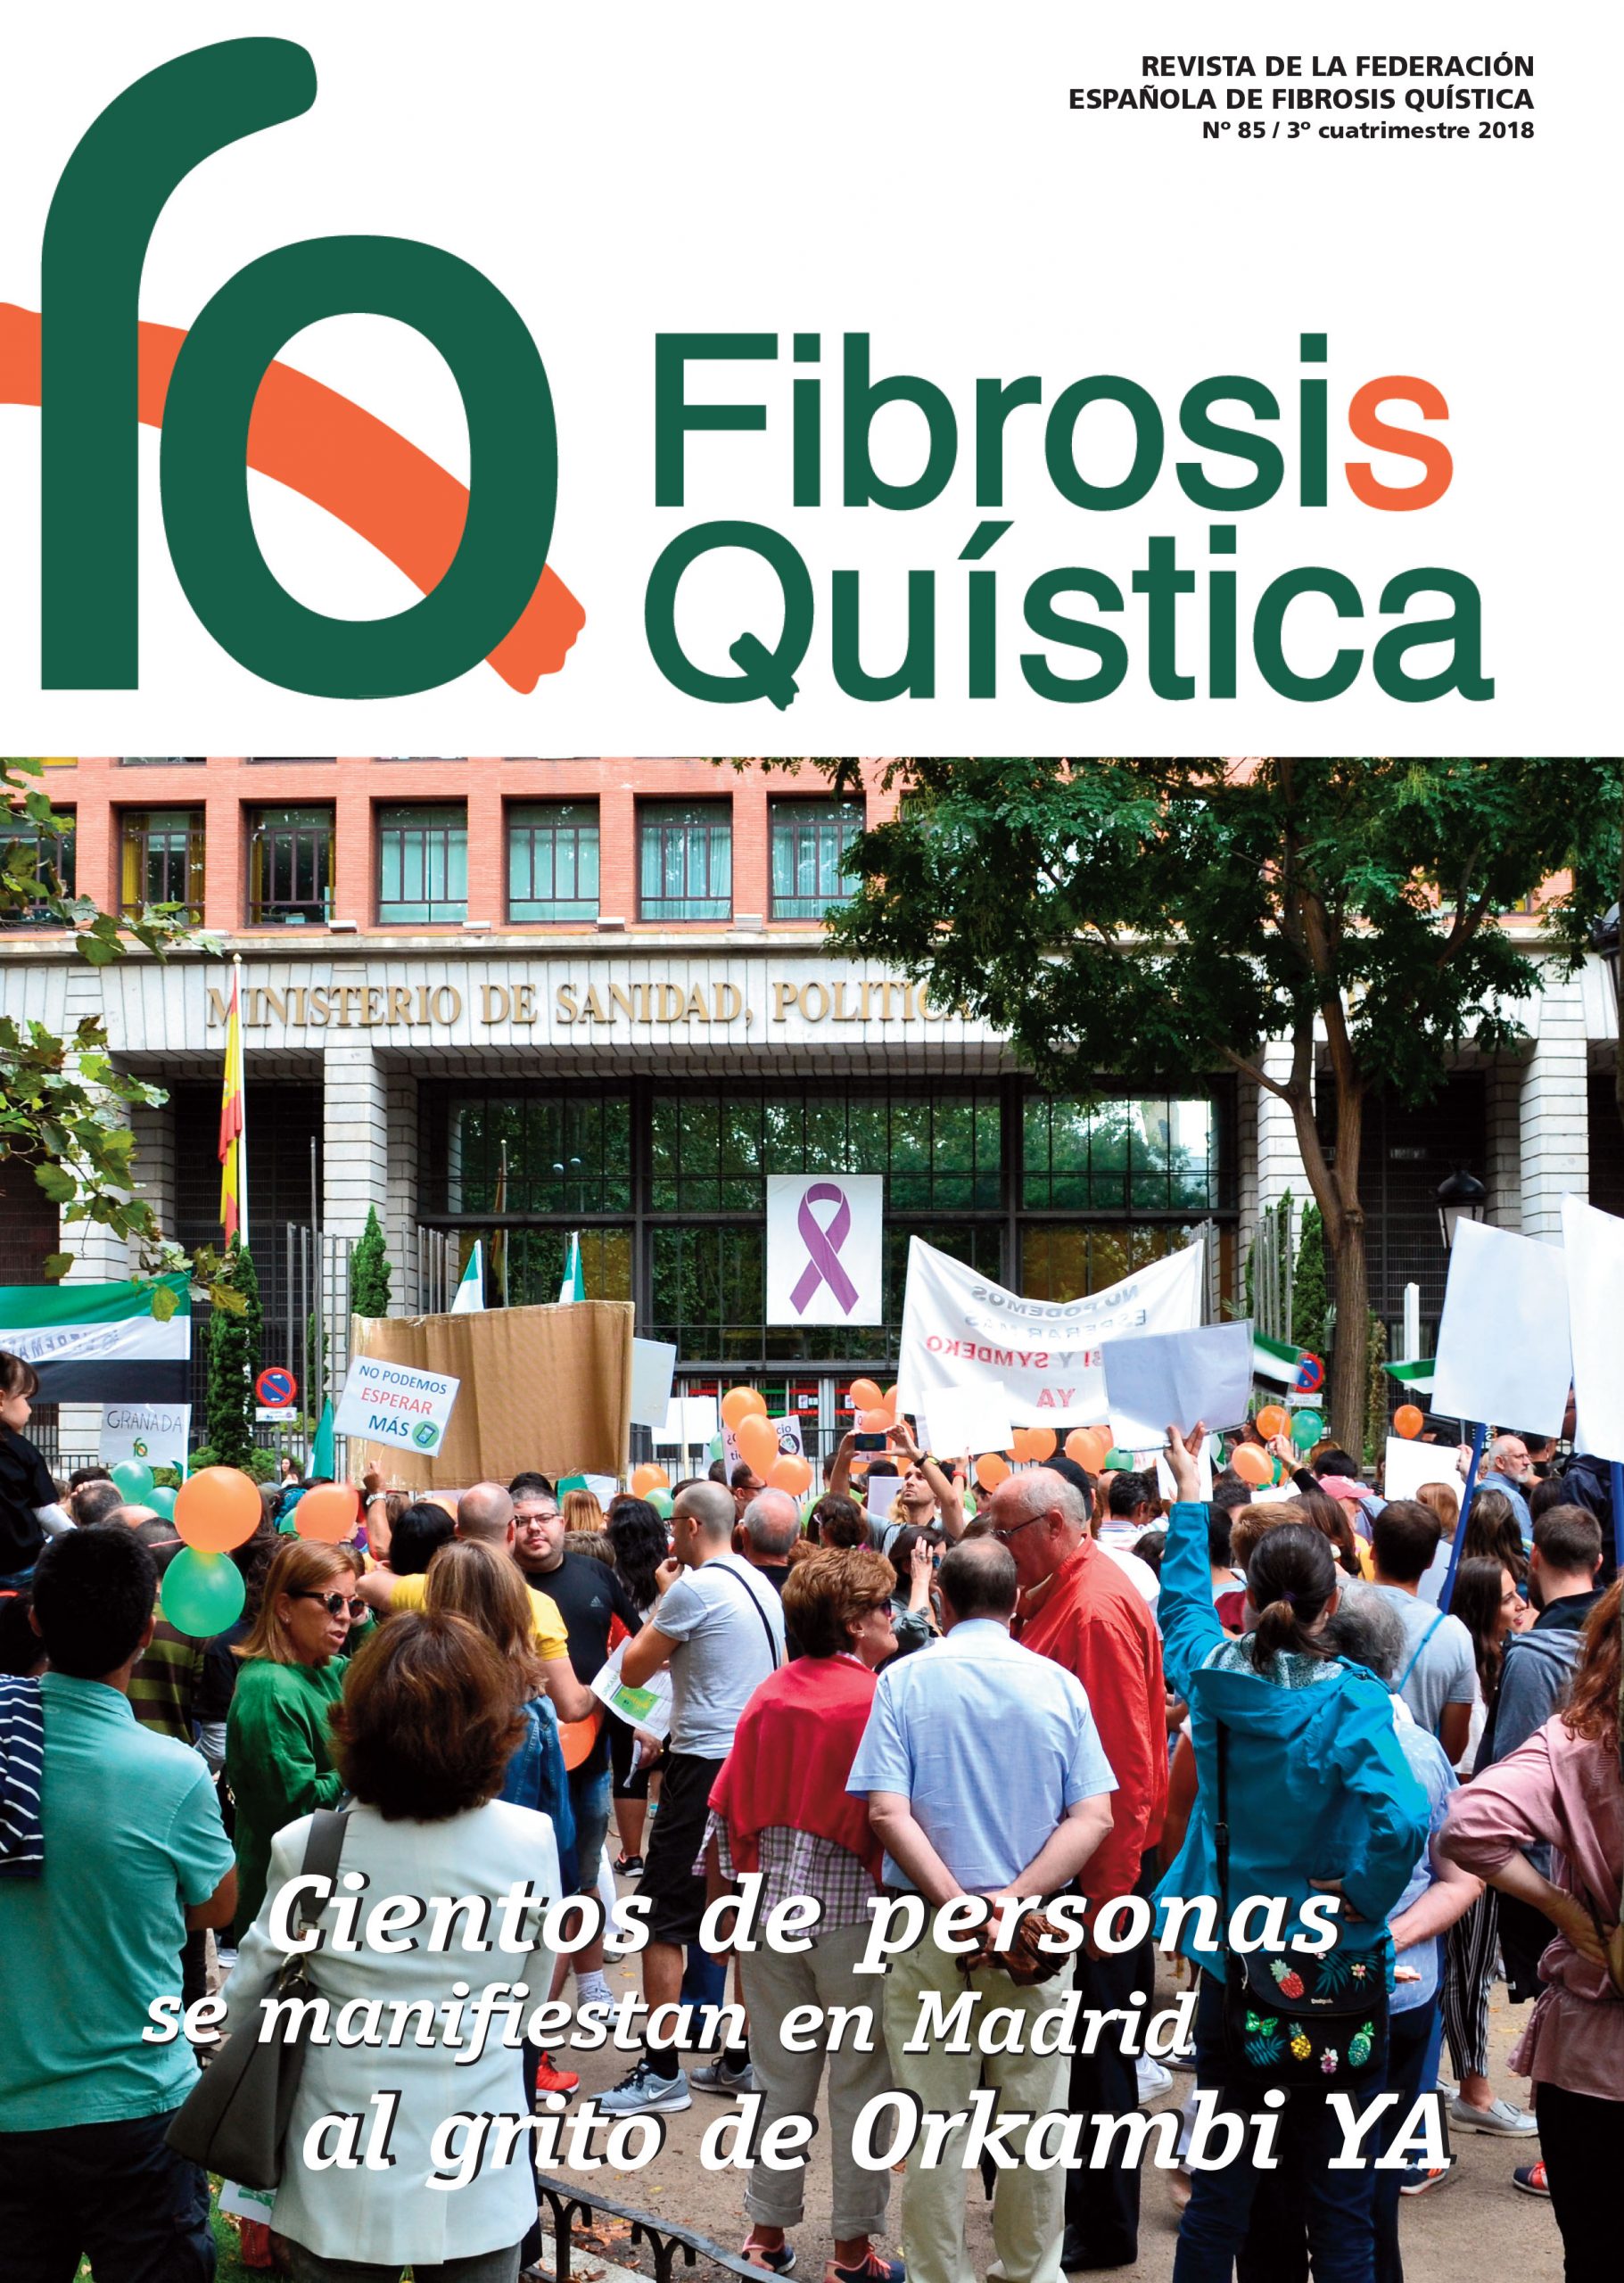 federacion española fibrosis quistica ya podeis leer on line el numero 85 de nuestra revista fq scaled